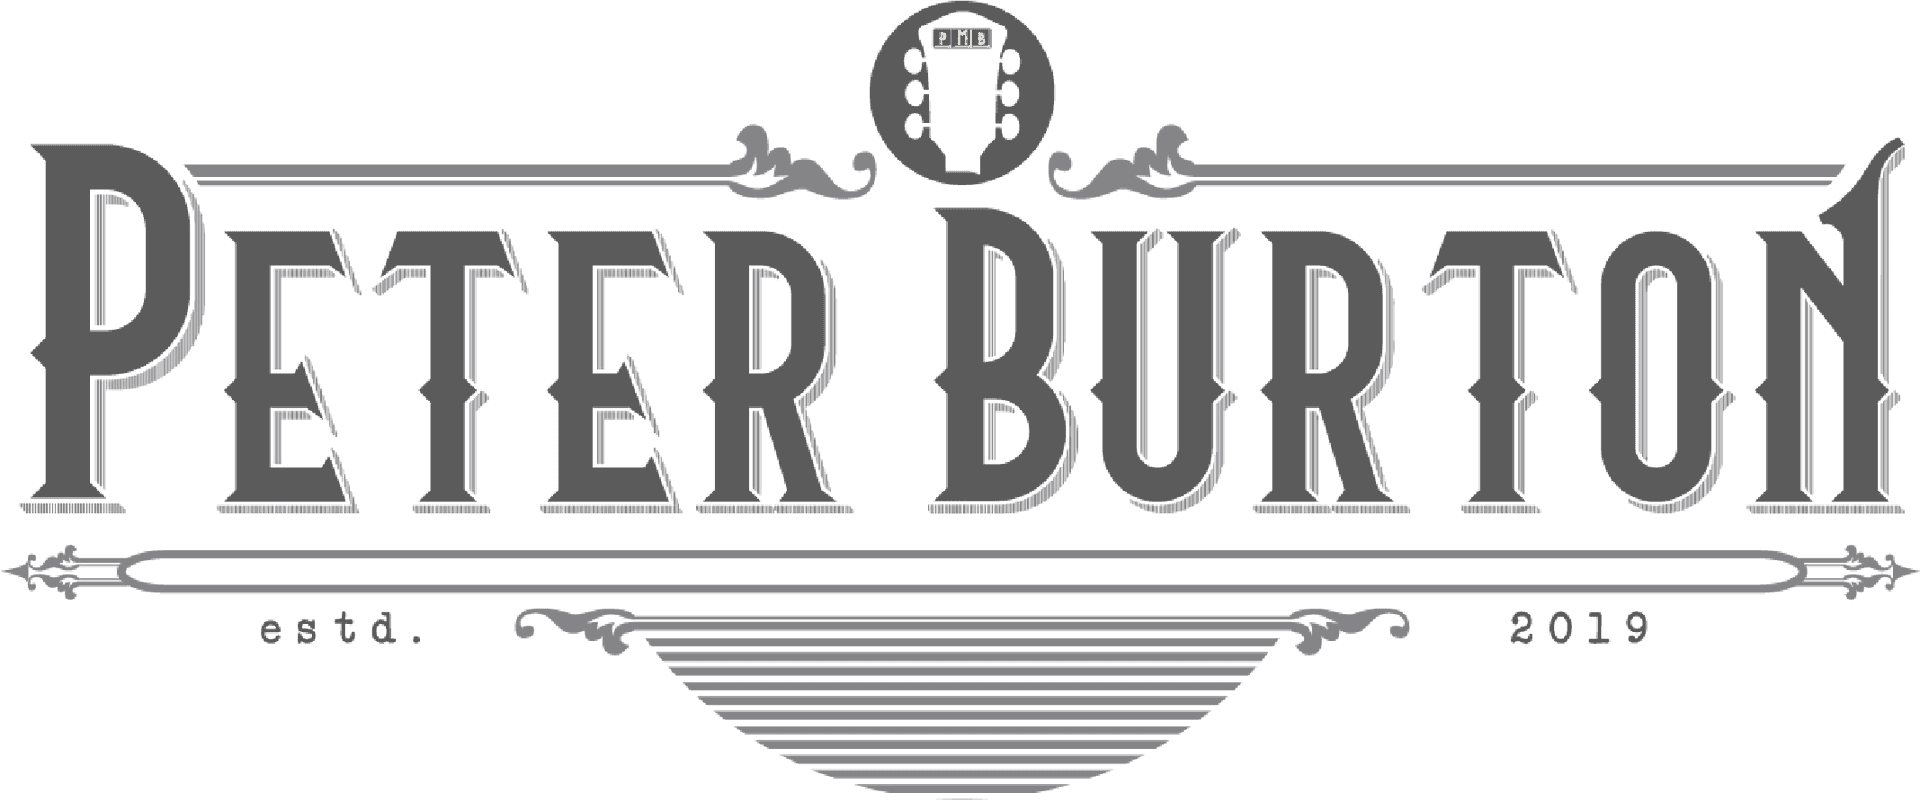 Peter Burton Established Logo PNG